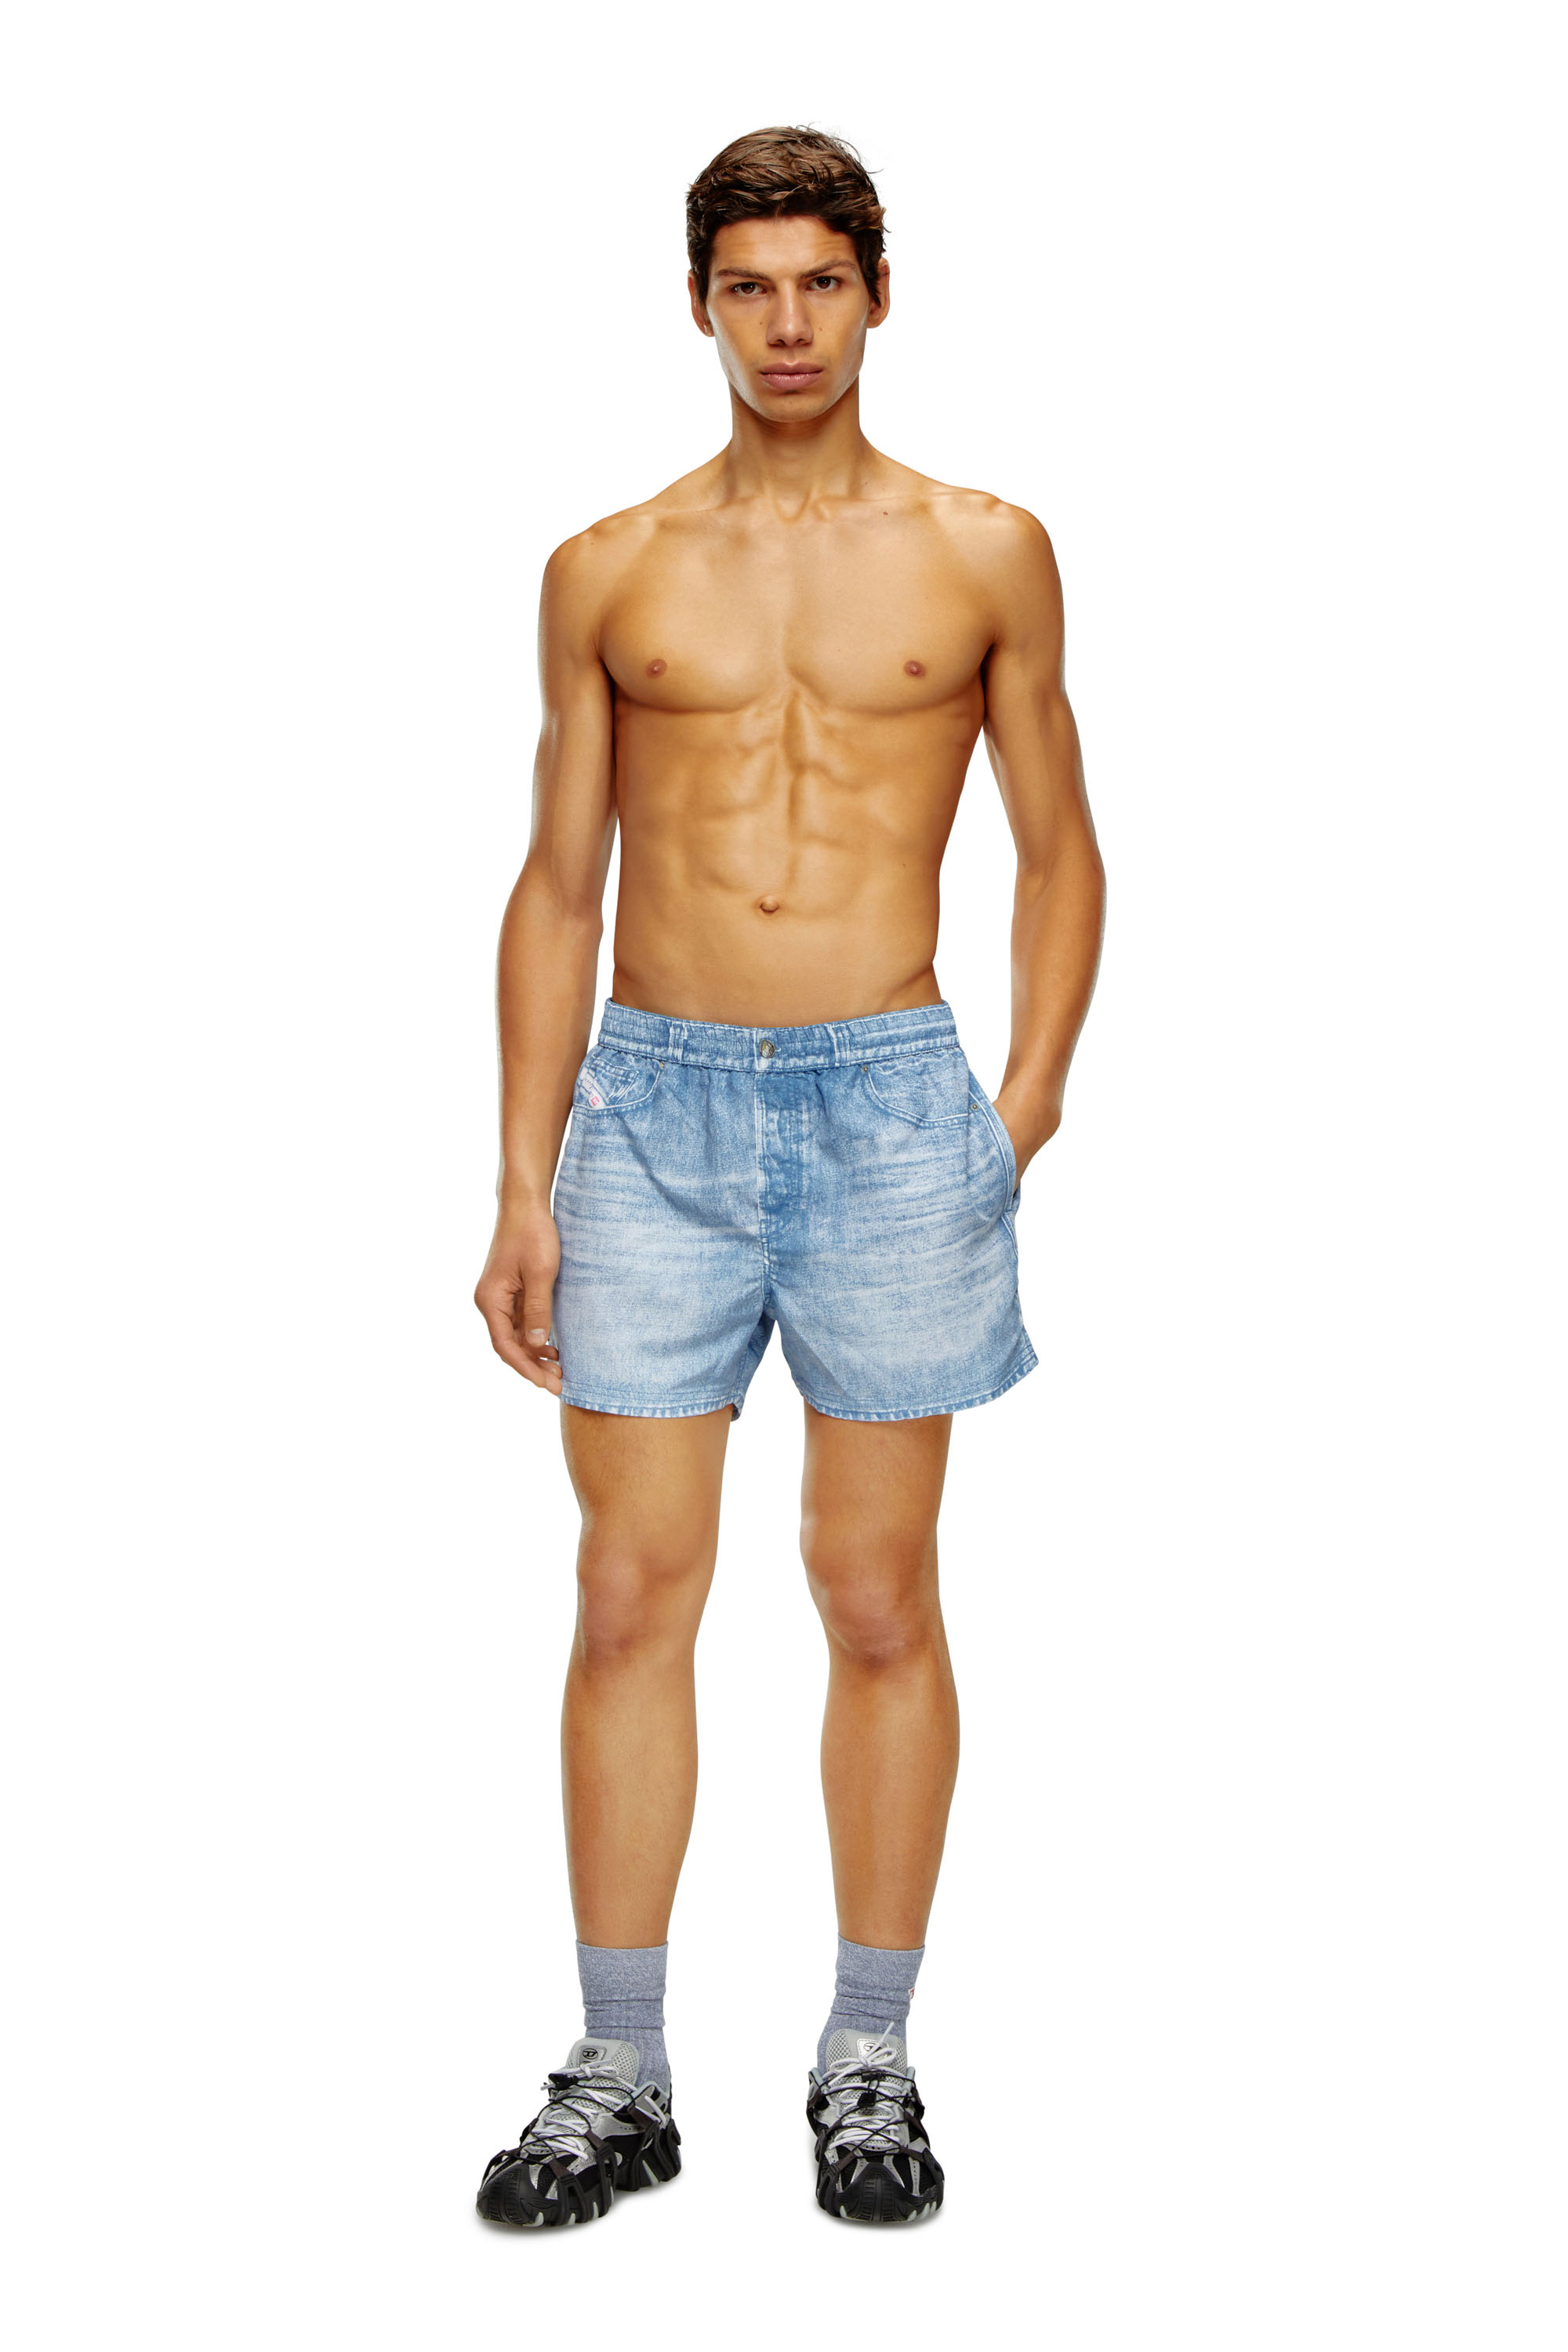 Men's Beachwear: Swimwear, Beach Towel